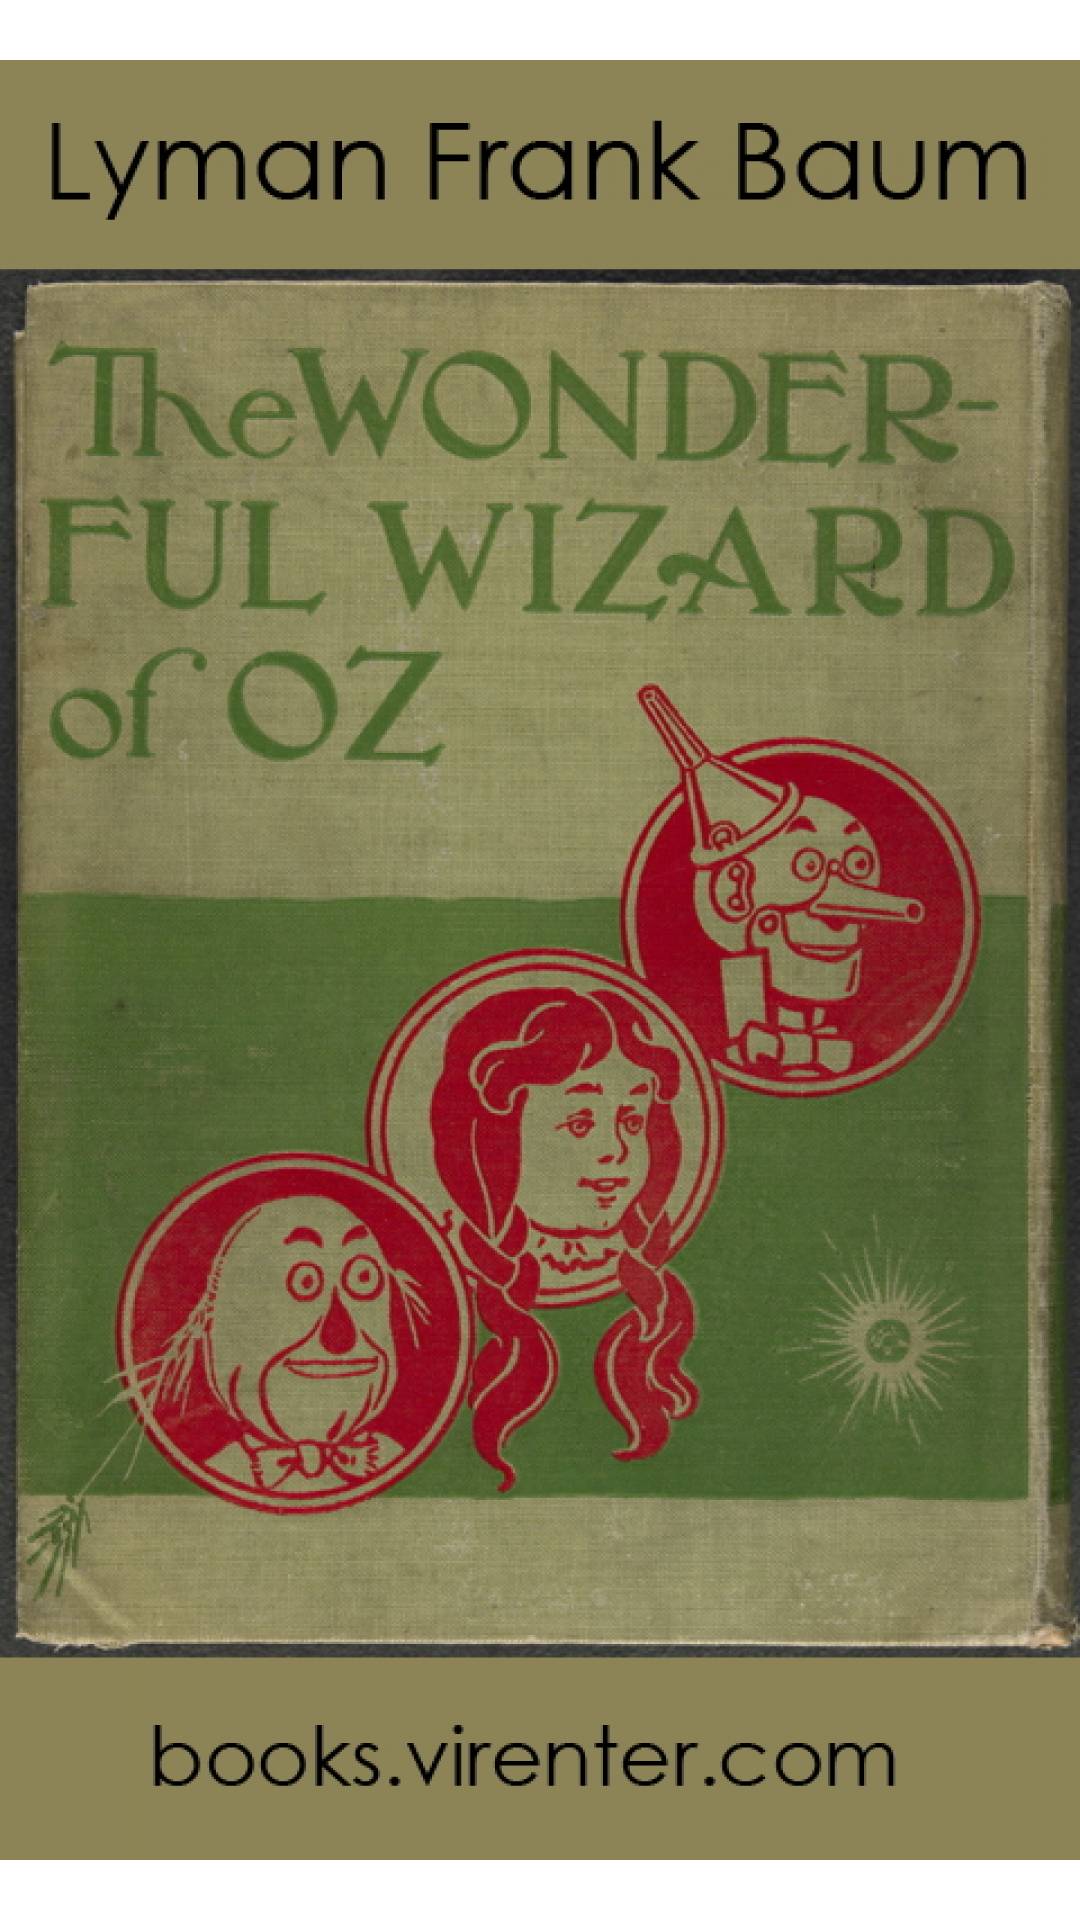 L.Frank Baum - The Wonderful Wizard of Oz